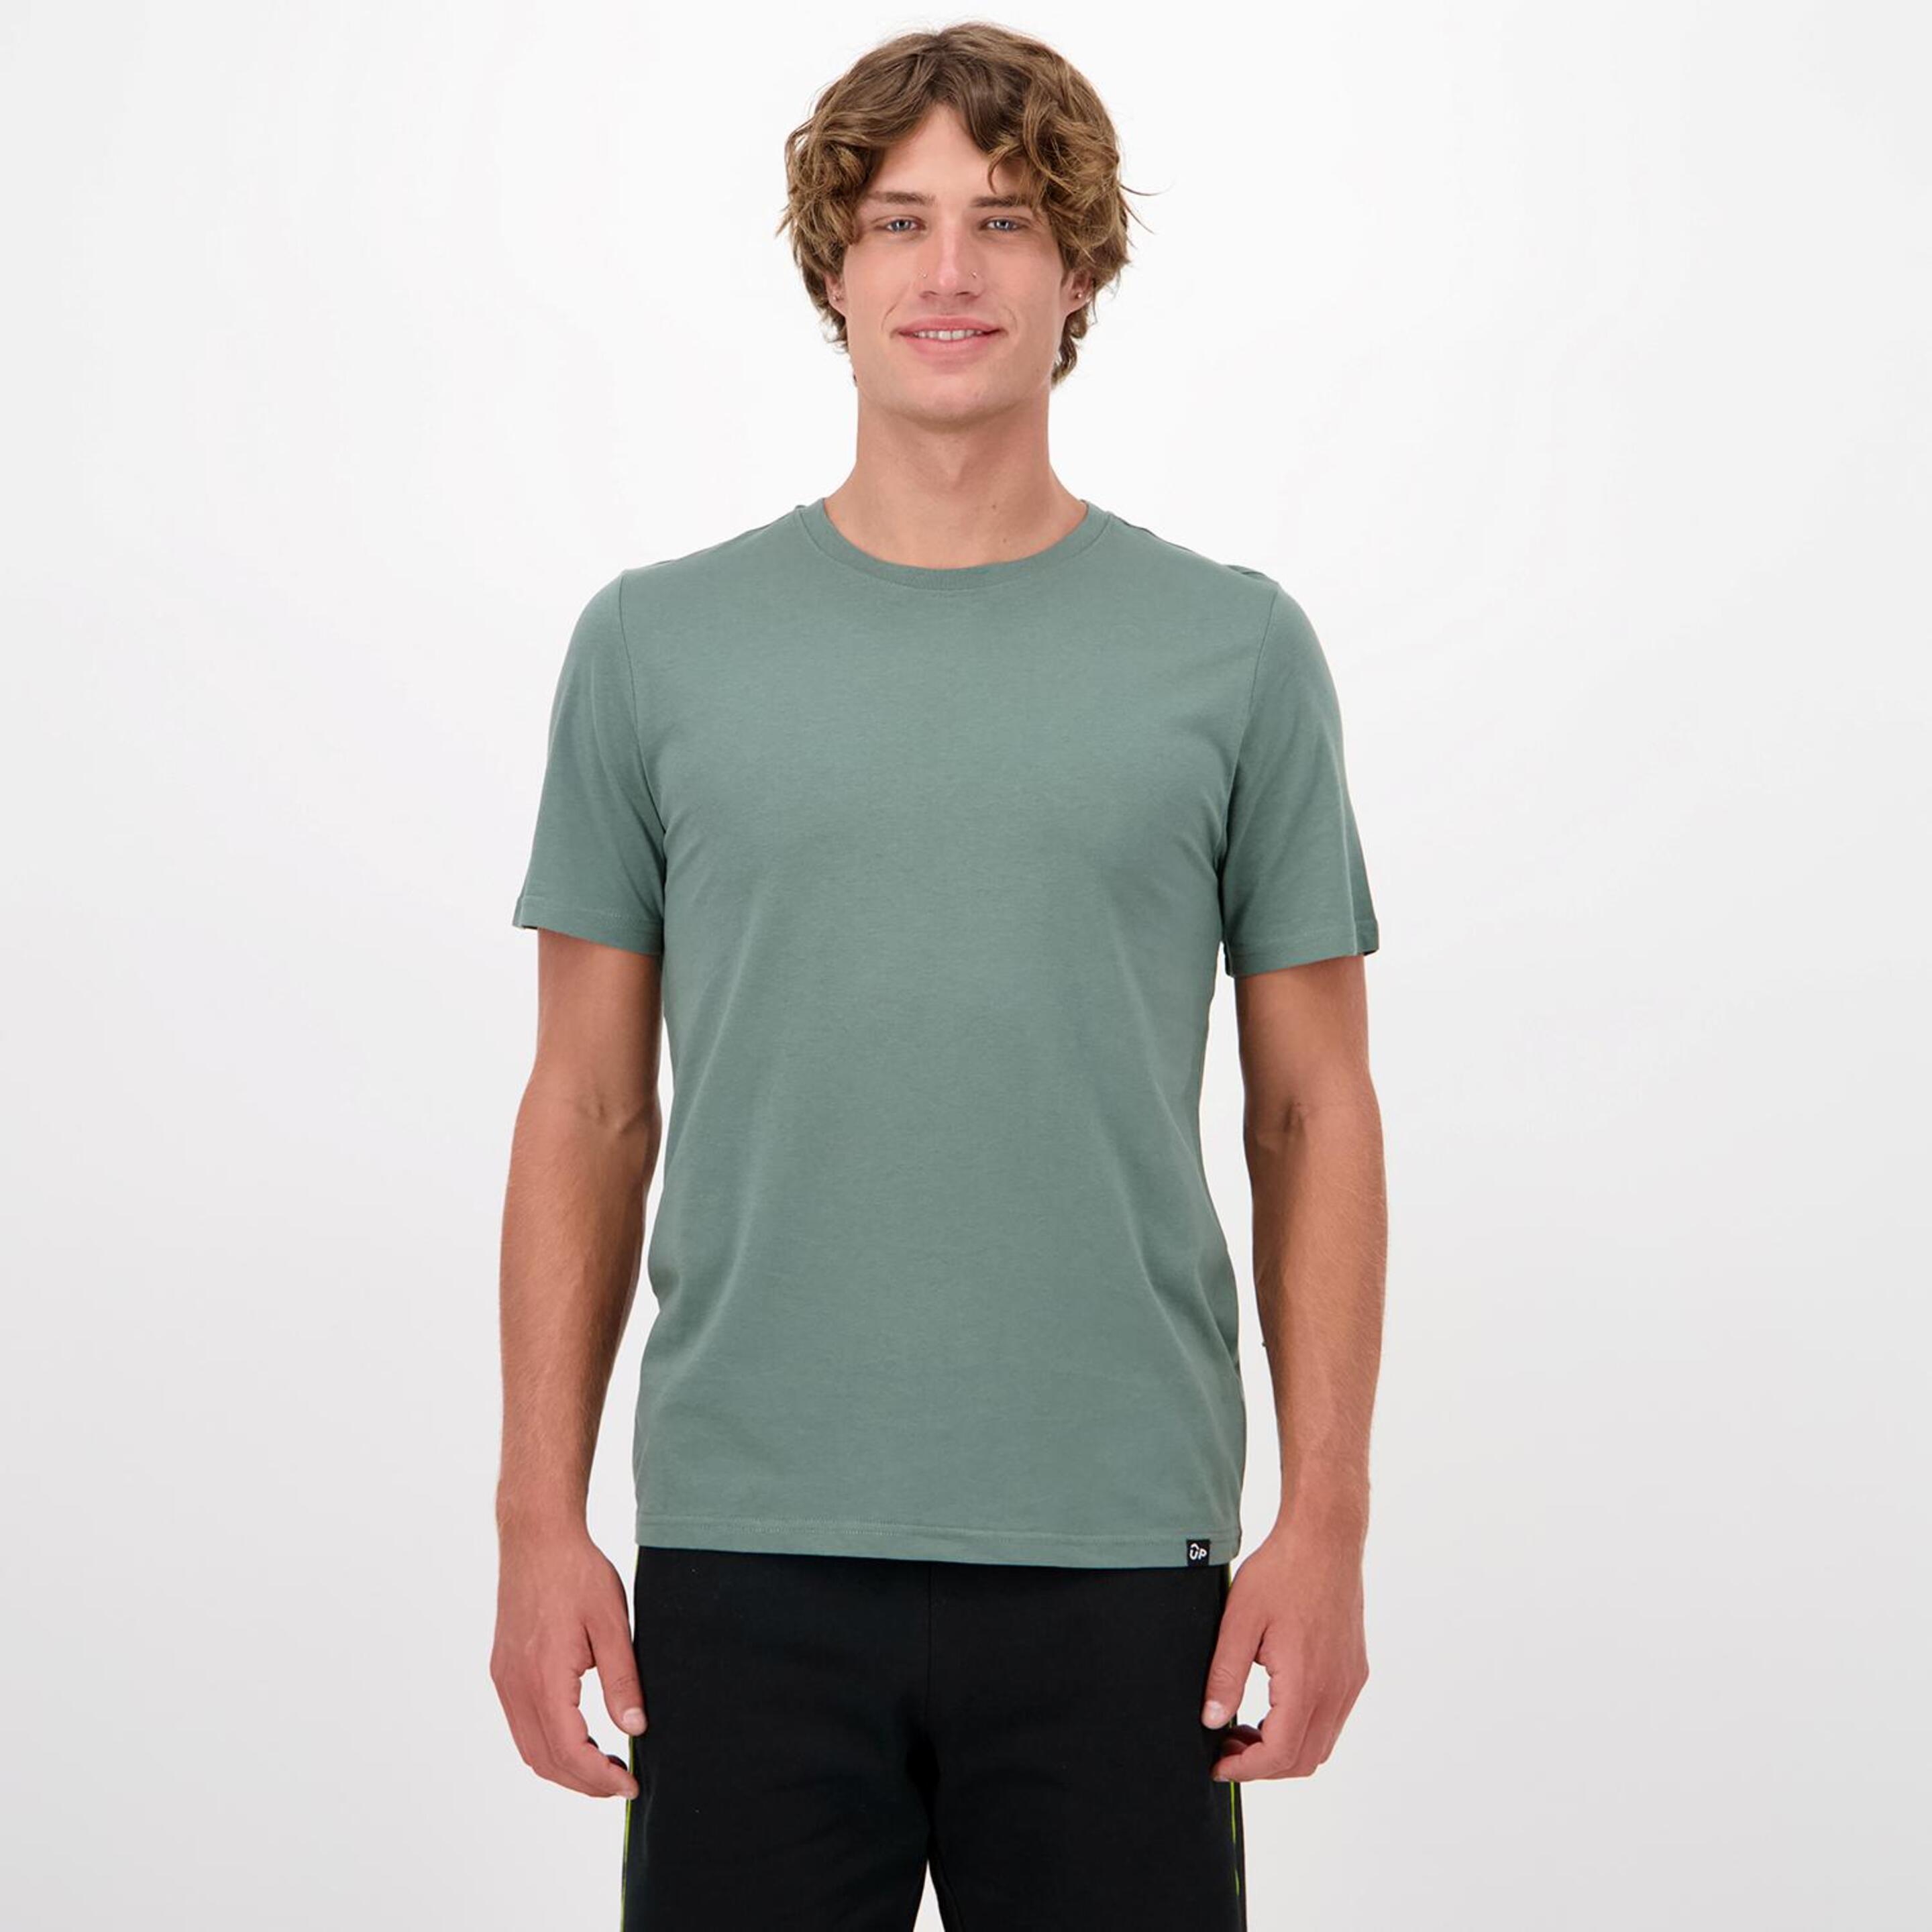 Up Basic - verde - Camiseta Hombre